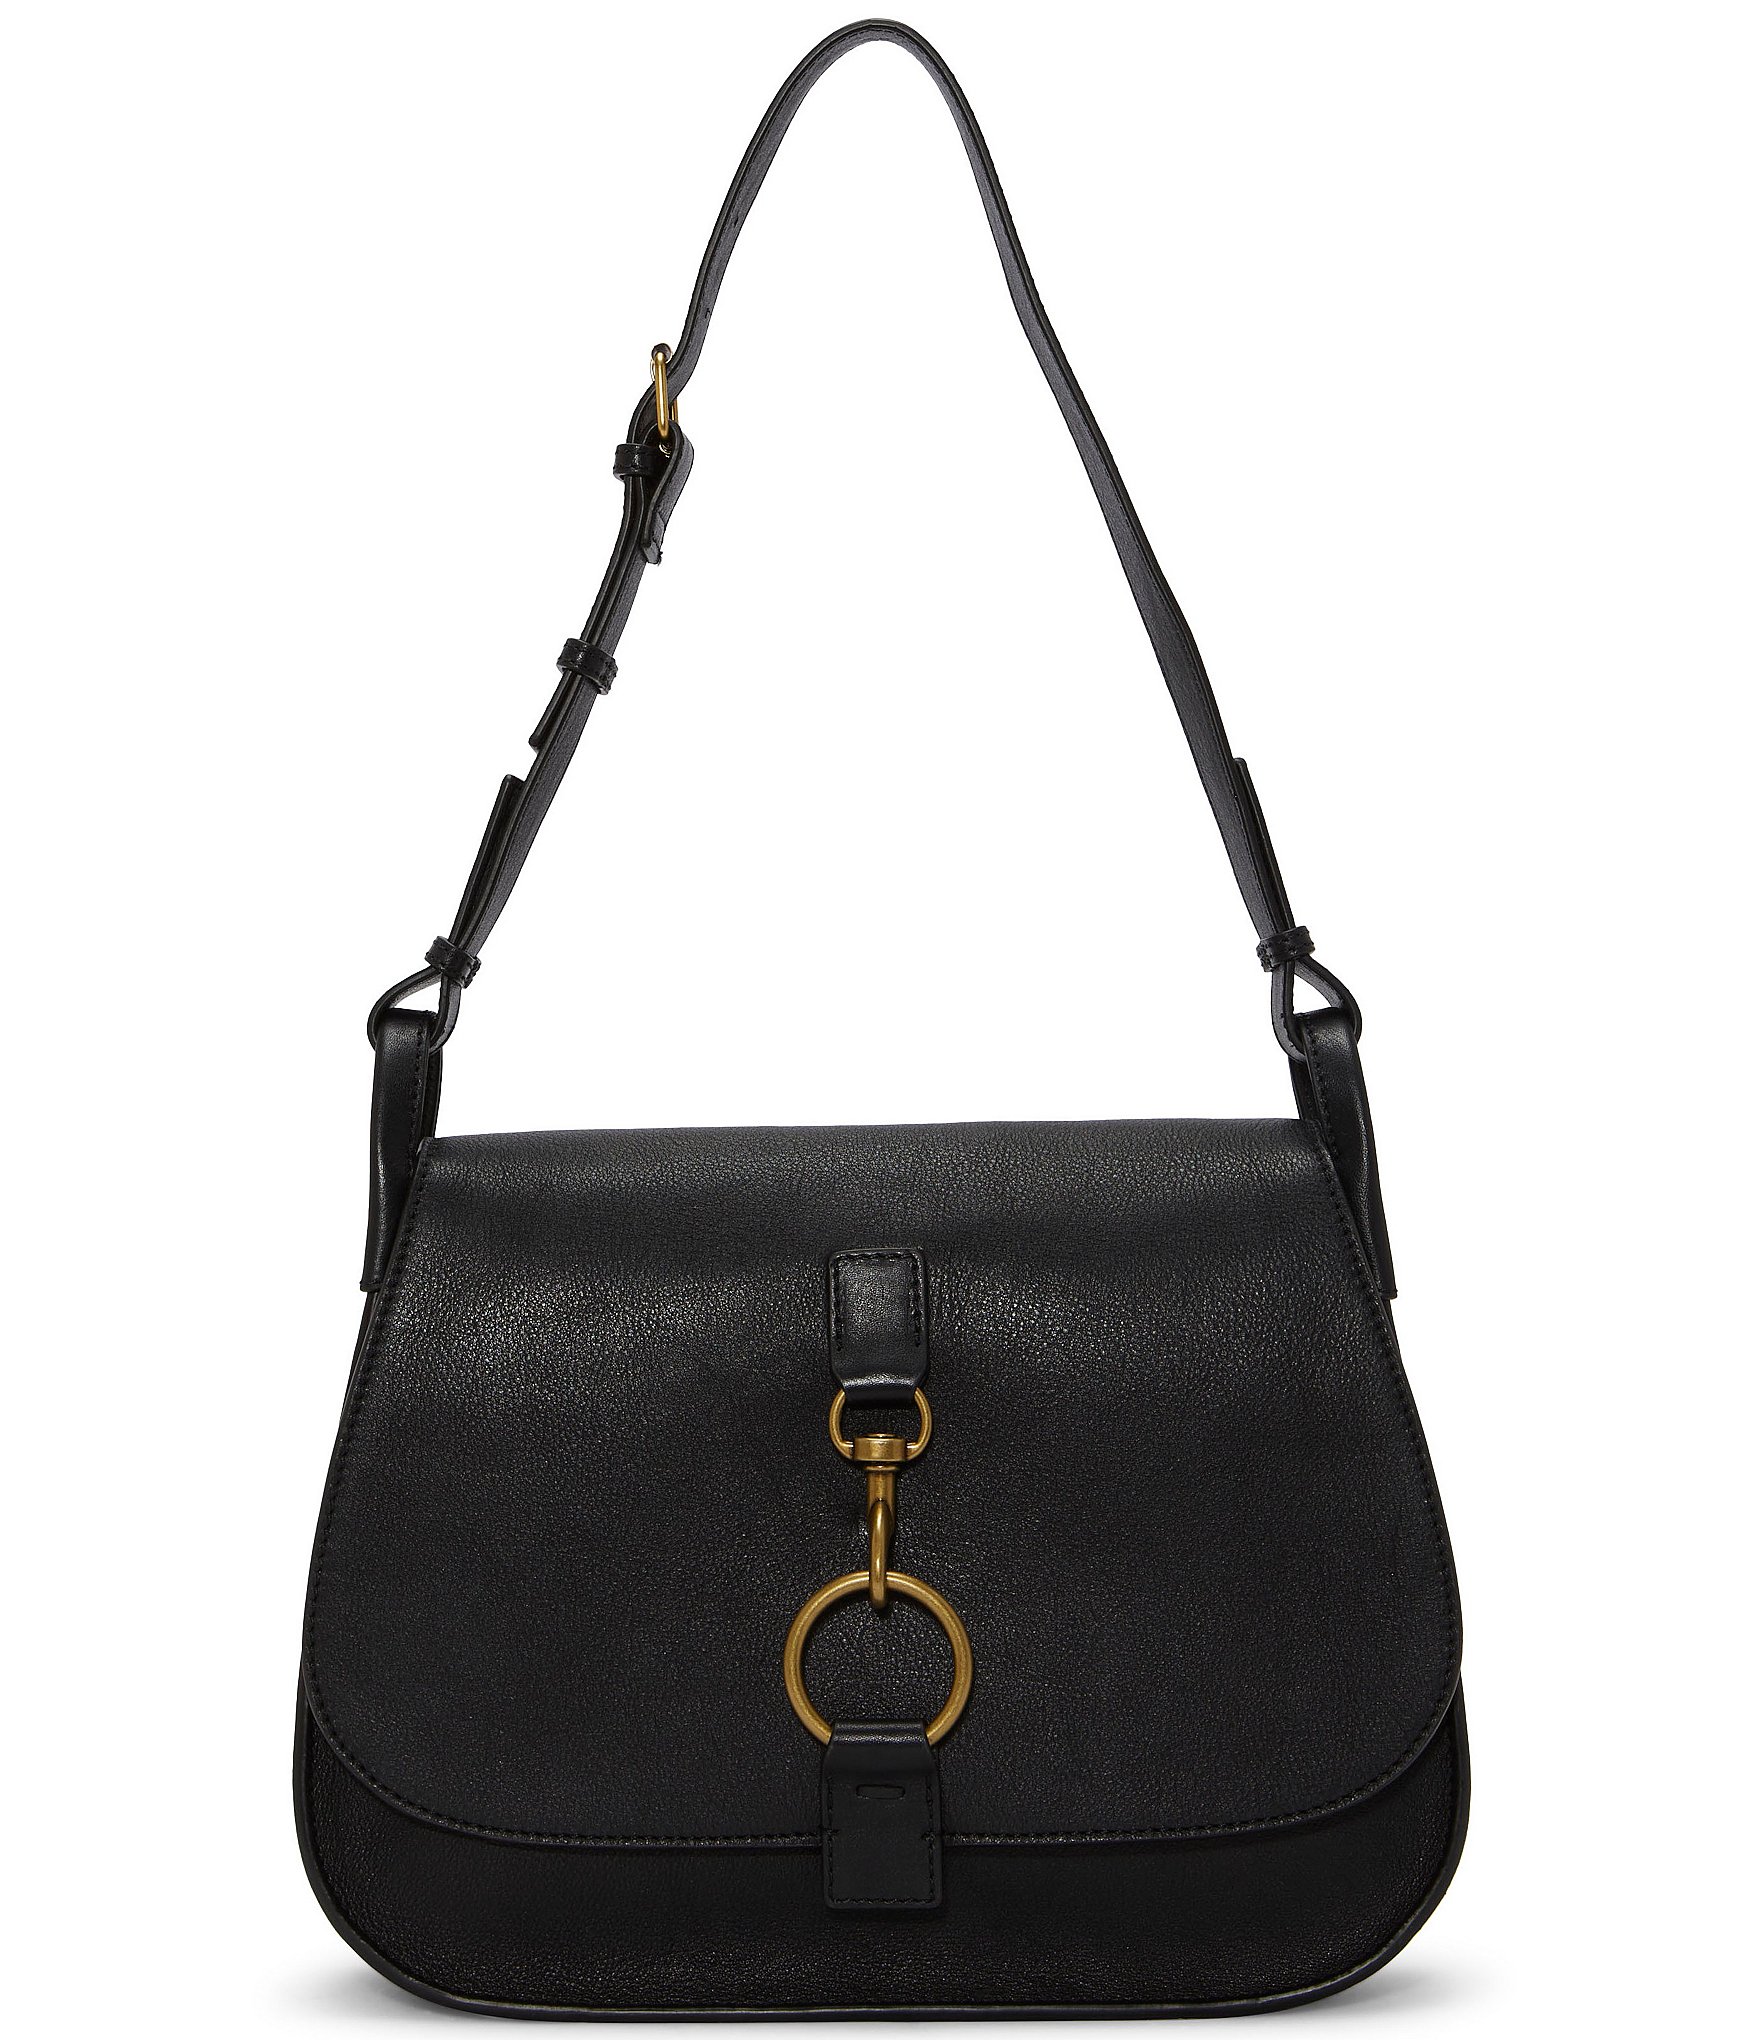 Lucky Brand womens Rala Shoulder Bag, Dune, One Size US: Handbags:  Amazon.com